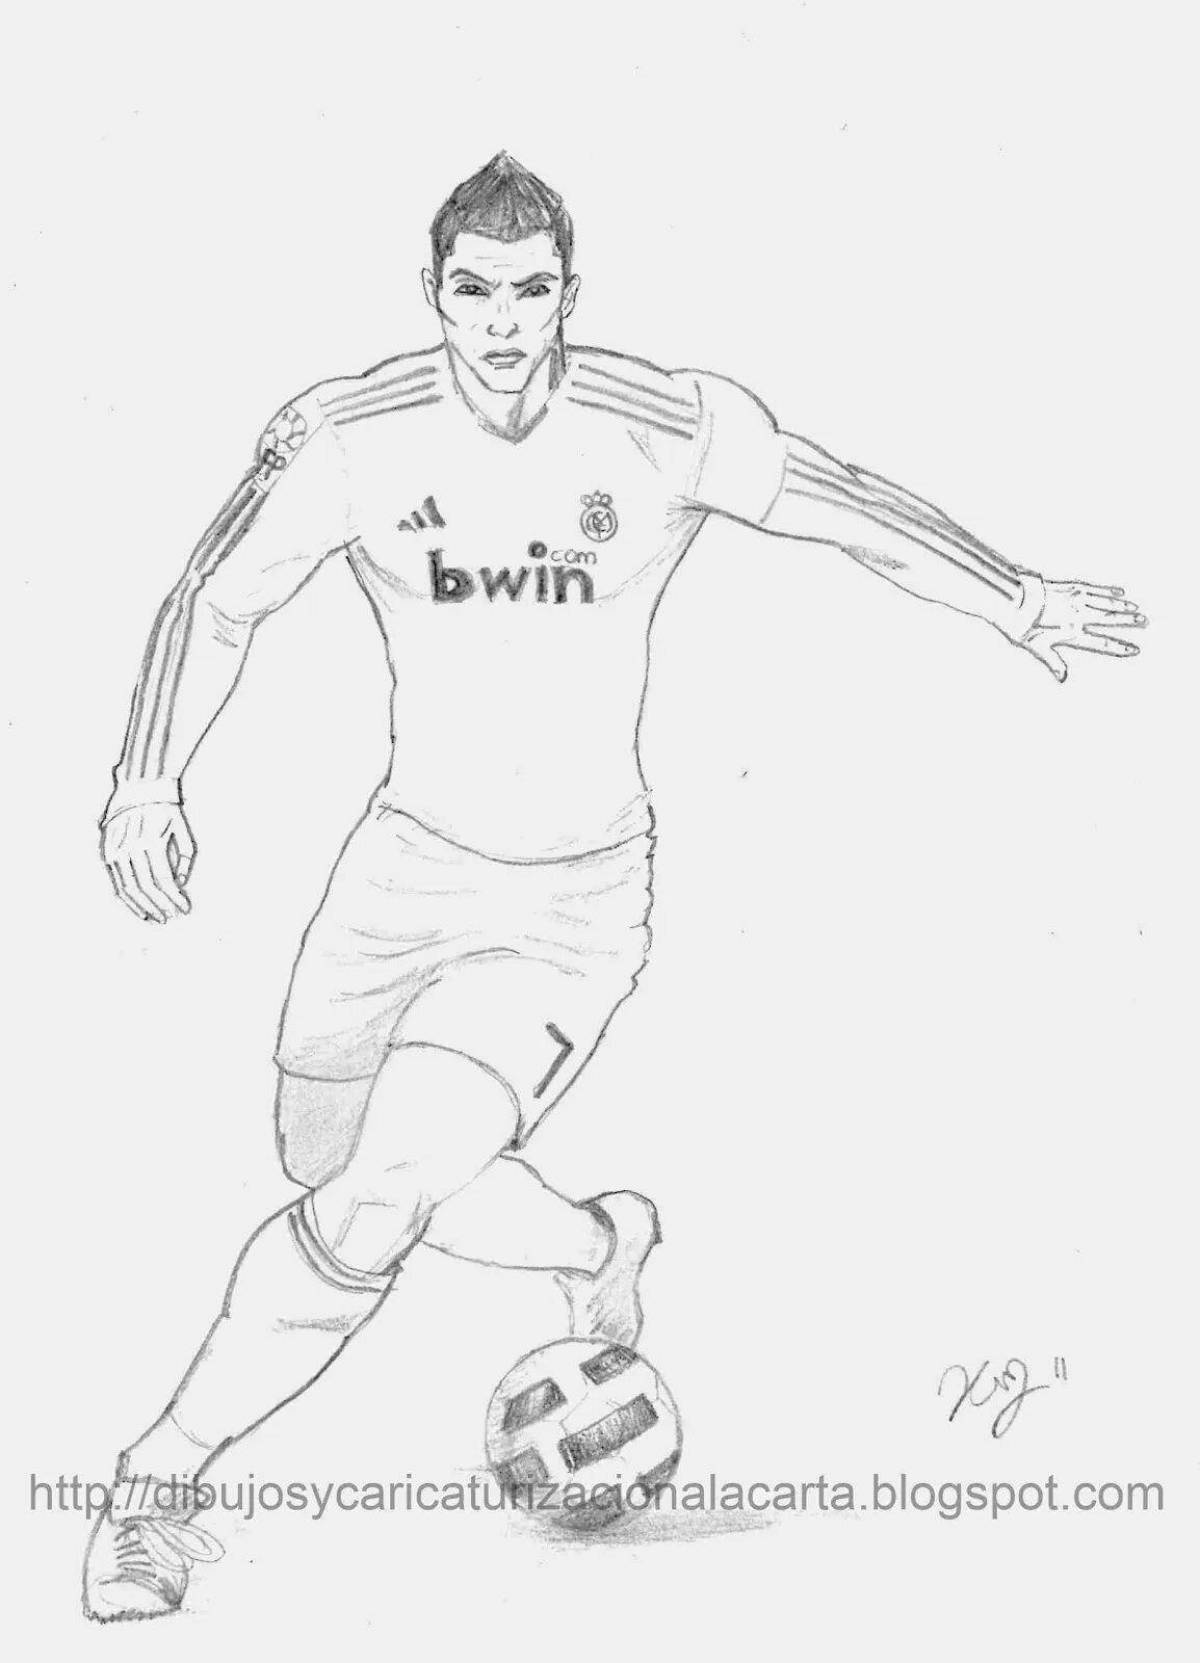 Ronaldo's joyful football coloring book